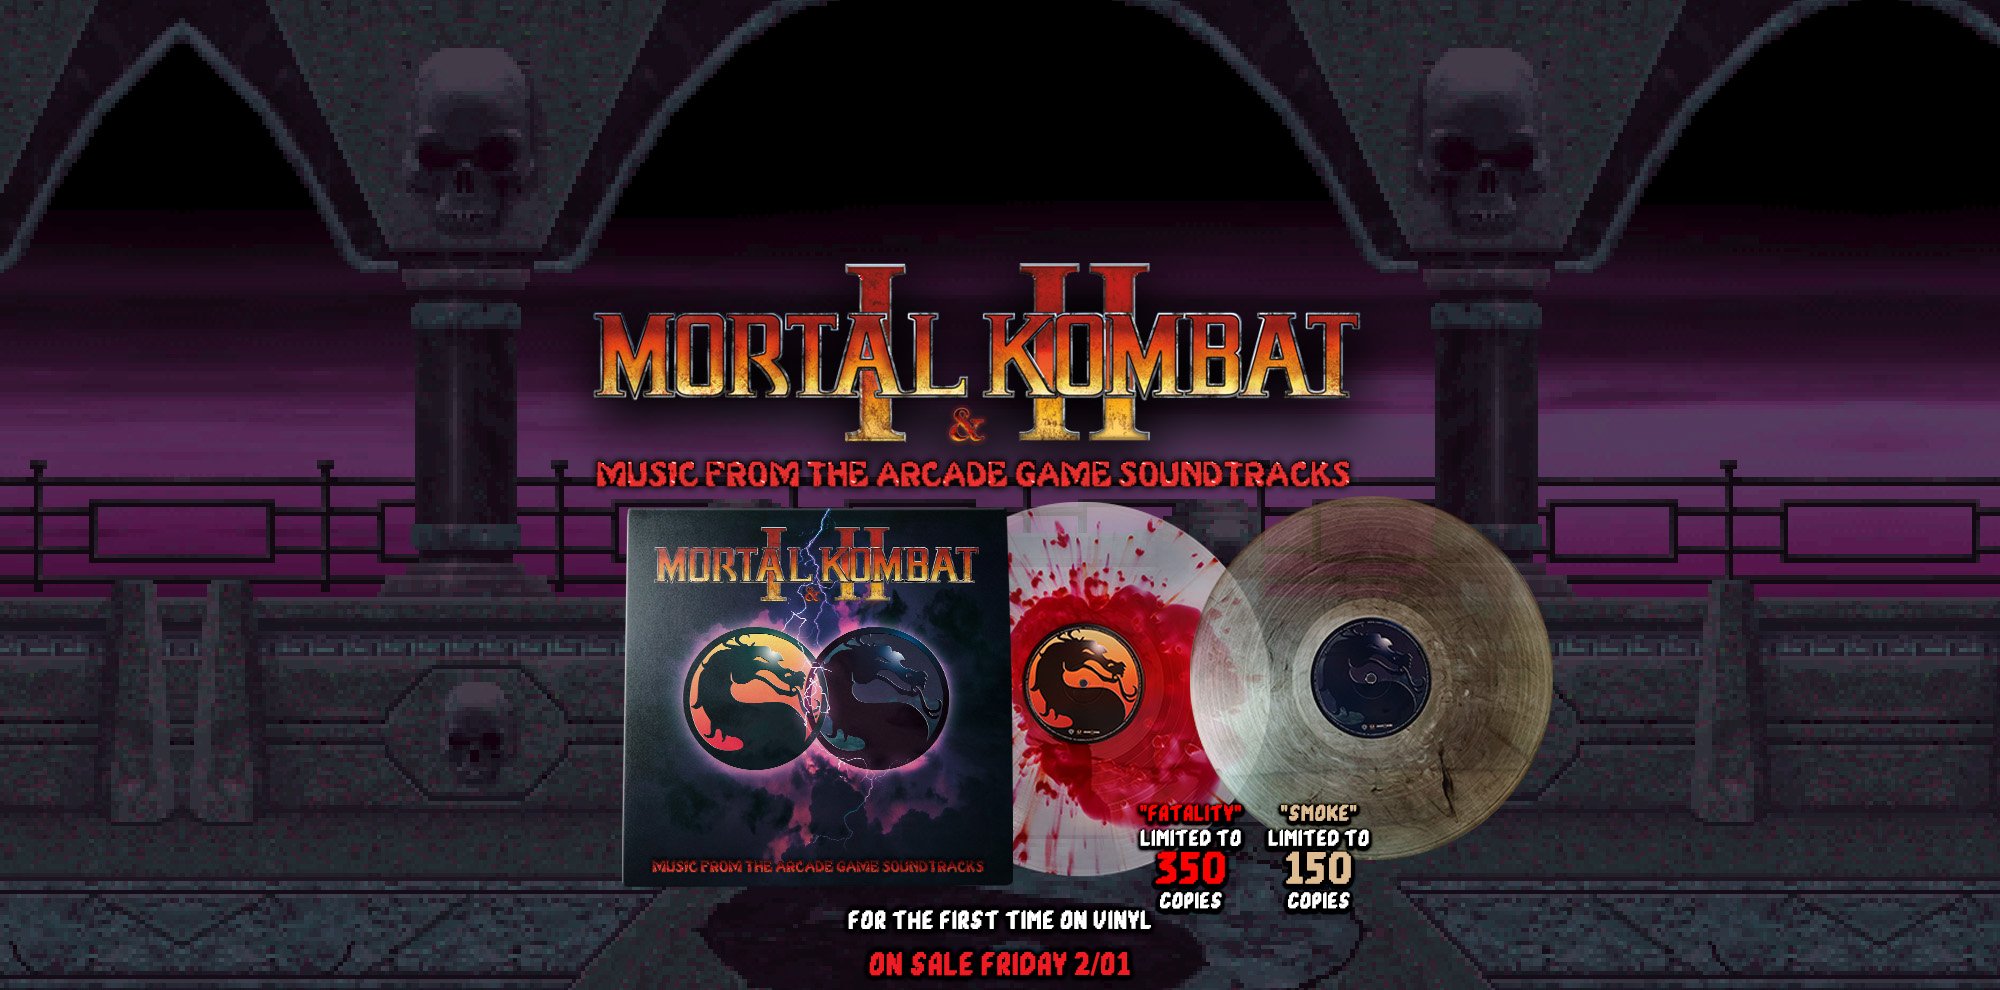 Mortal Kombat X Kitana Mileena Jade PNG, Clipart, Anime, Baraka, Black  Hair, Cartoon, Ear Free PNG